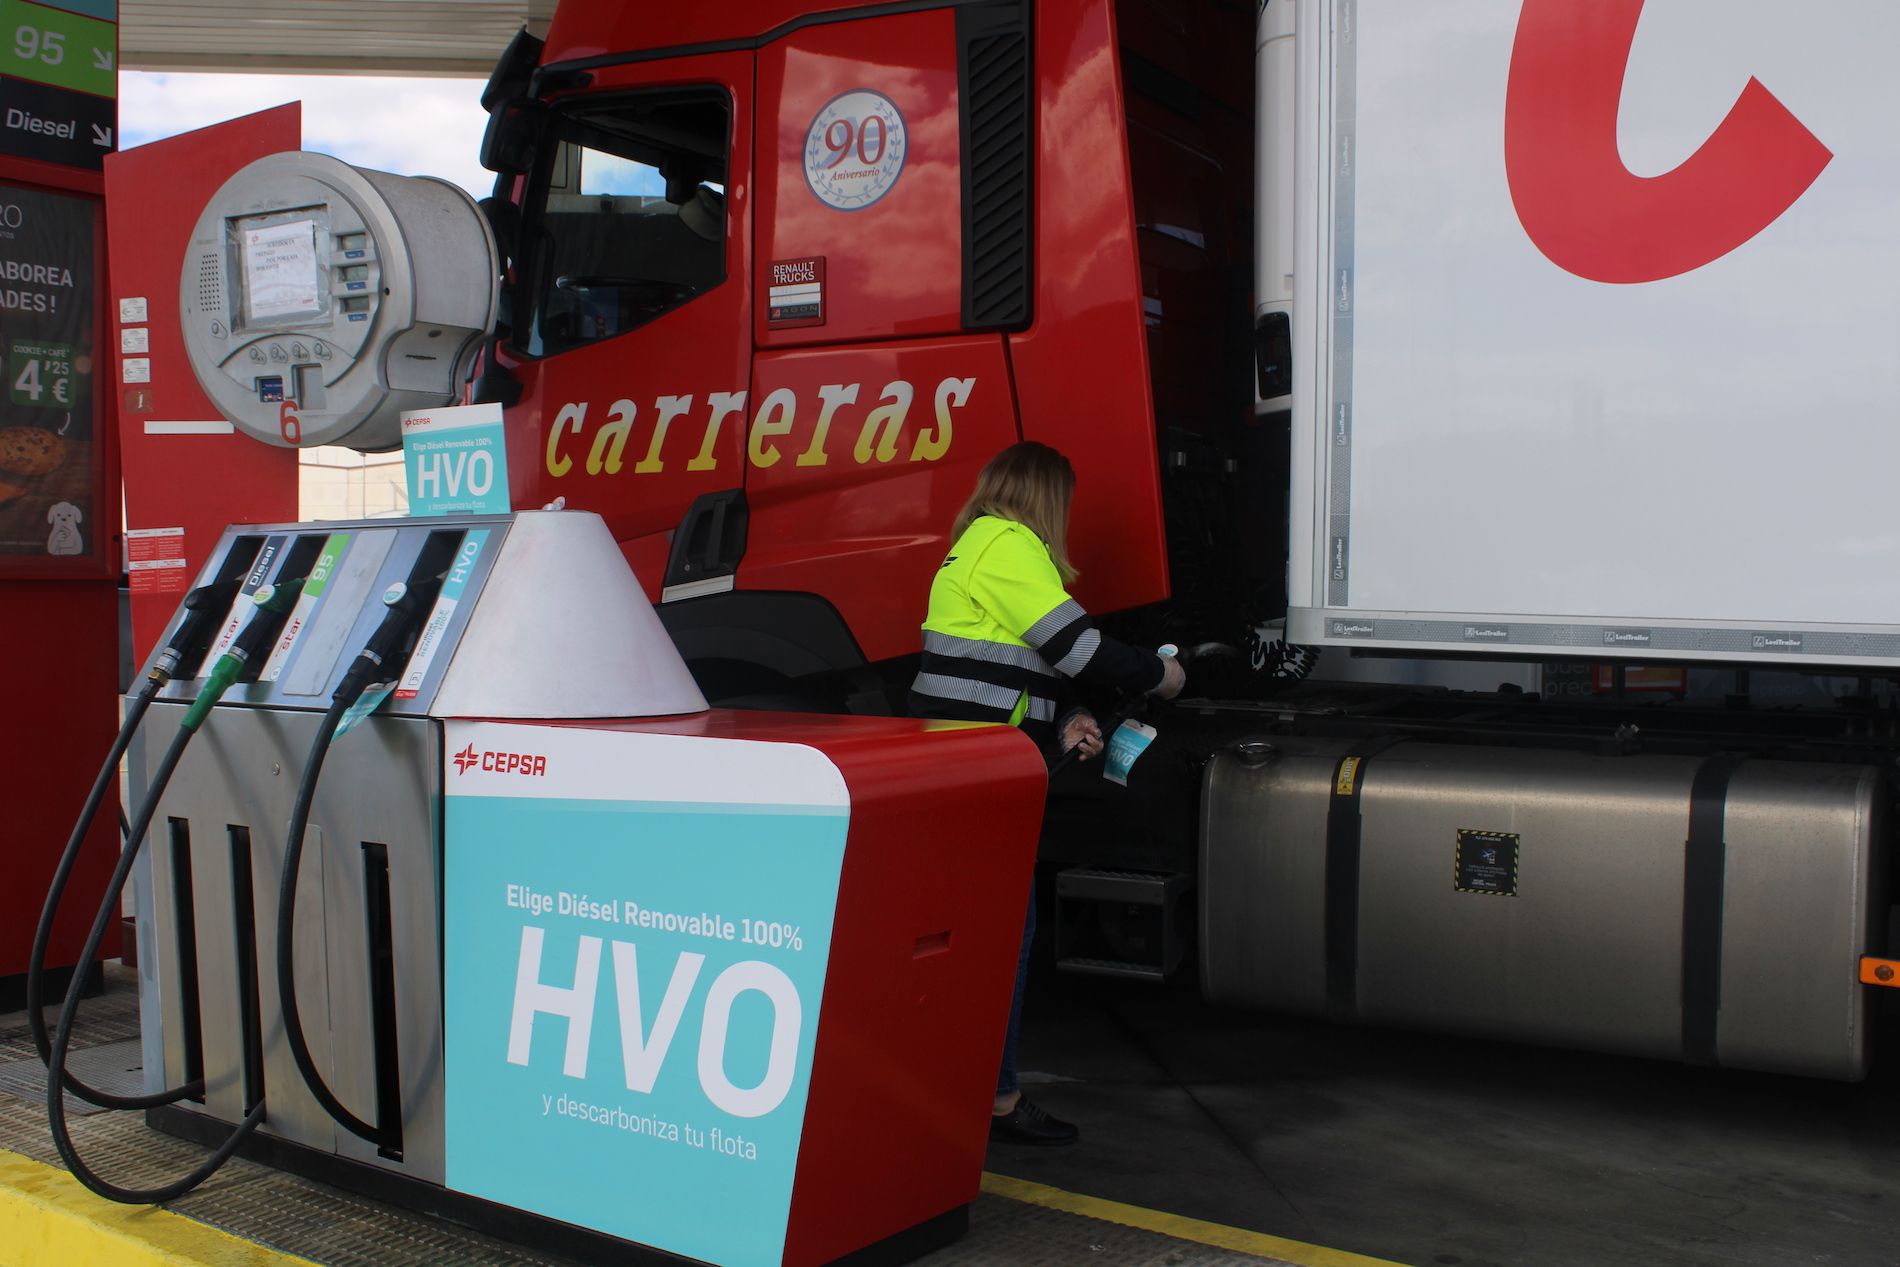 Repostaje Carreras diesel renovable HVO estacion Cepsa